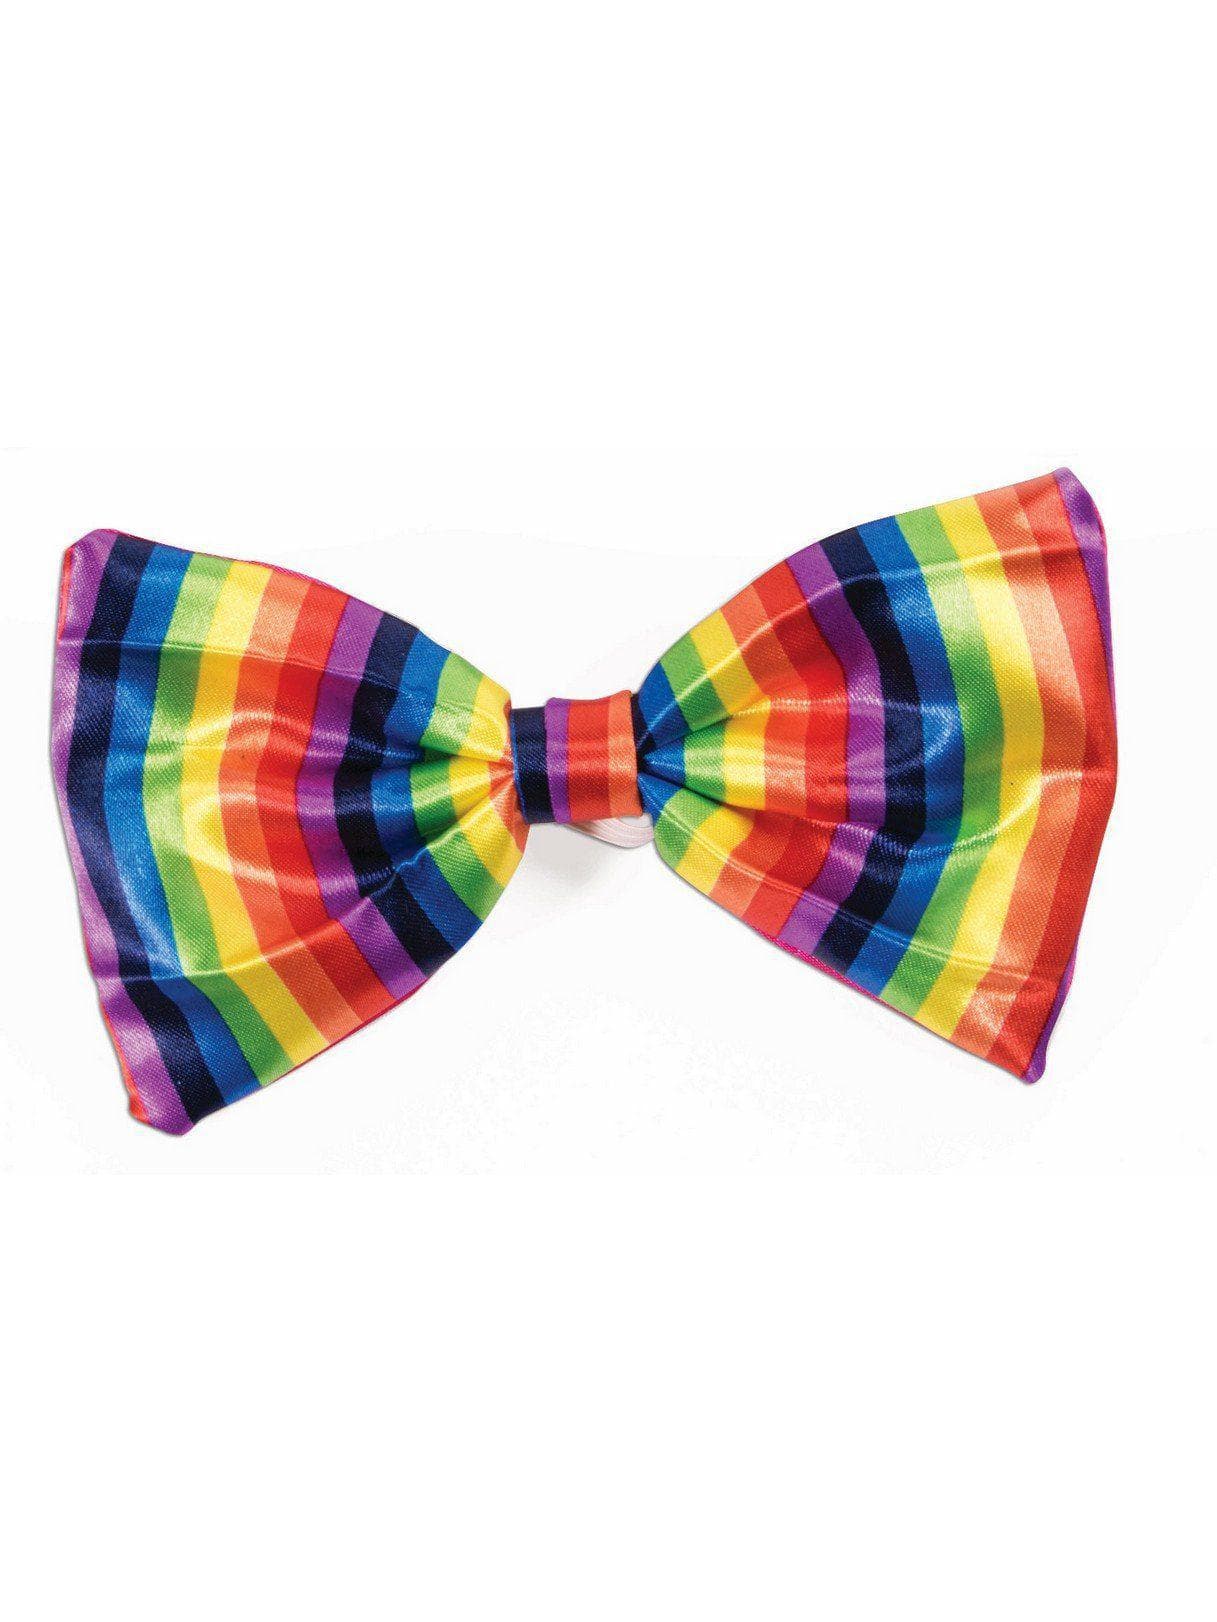 Adult Rainbow Stripe Bow Tie - costumes.com